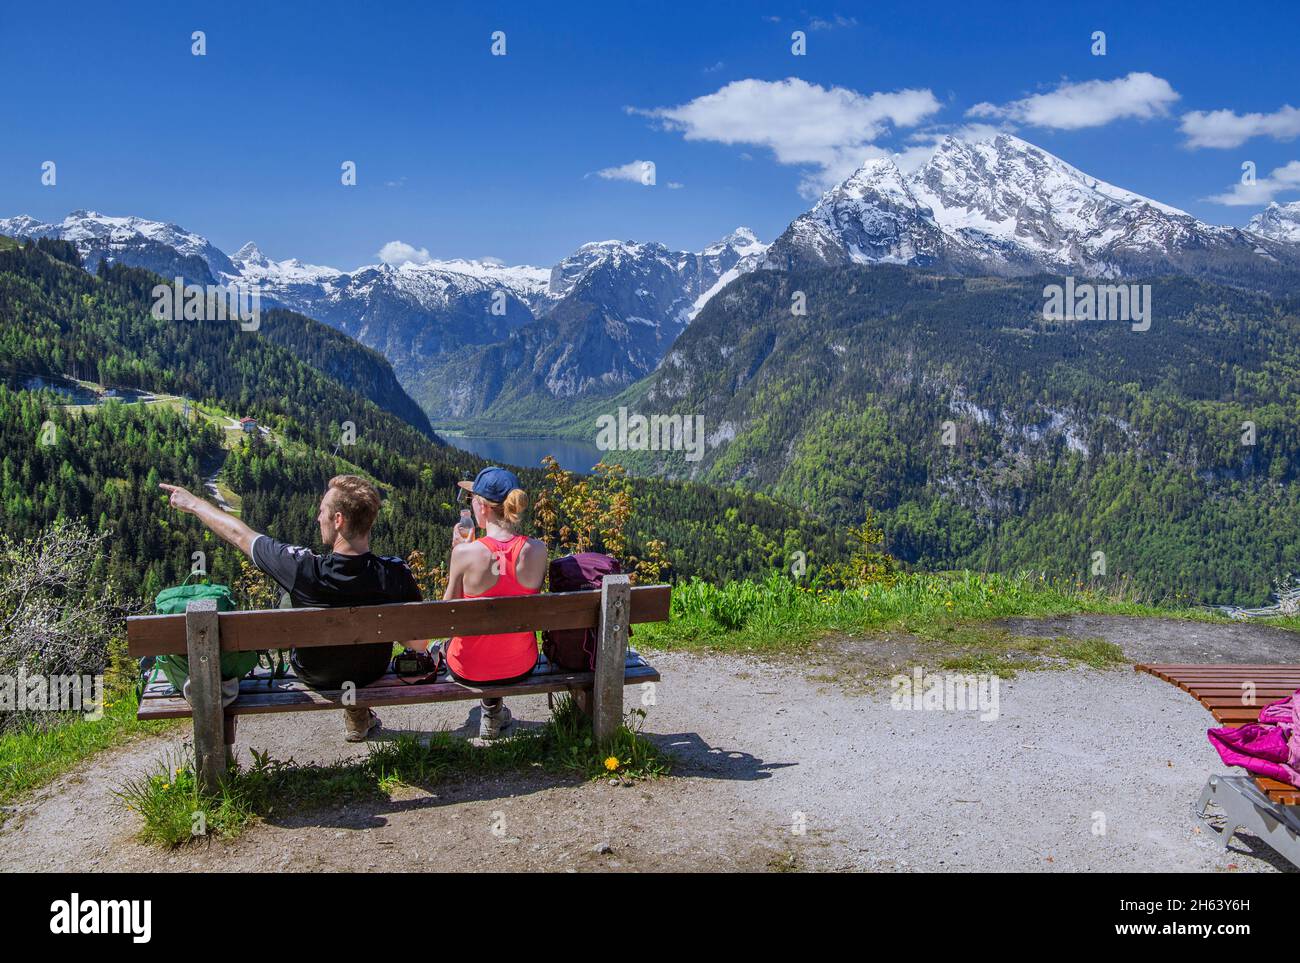 panca di osservazione con i turisti sul brandkopf con una vista di koenigssee, steinernes meer e watzmann 2713m, schönau am koenigssee, berchtesgaden alpi, berchtesgadener terra, alta baviera, baviera, germania Foto Stock